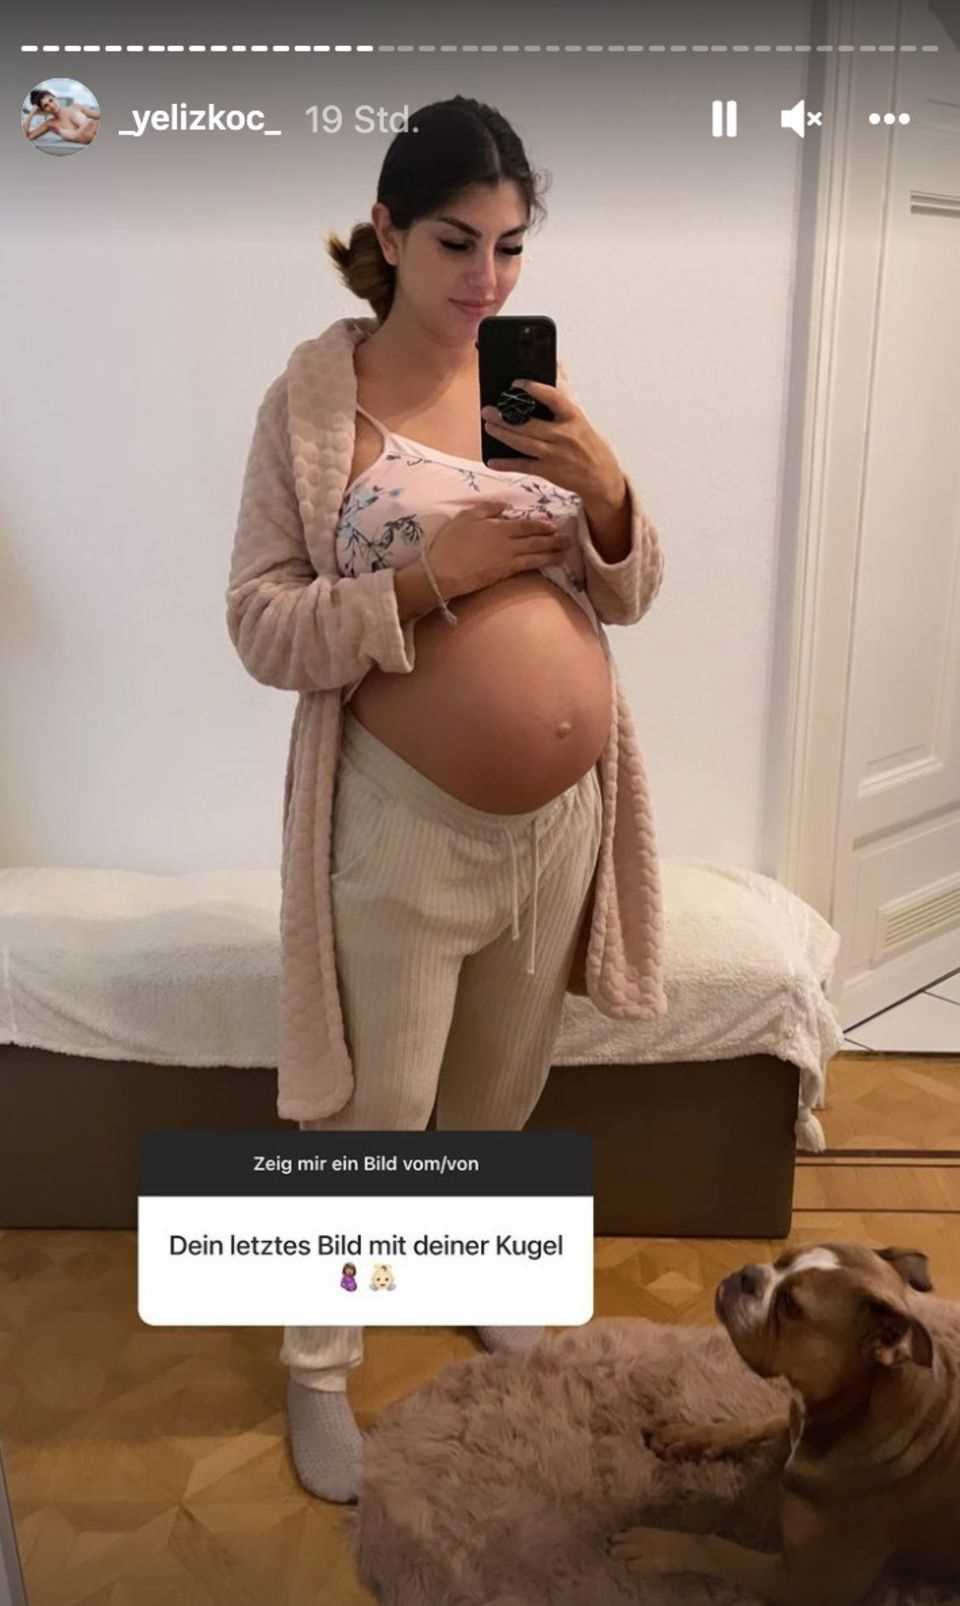 Yeliz Koc shows her baby bump